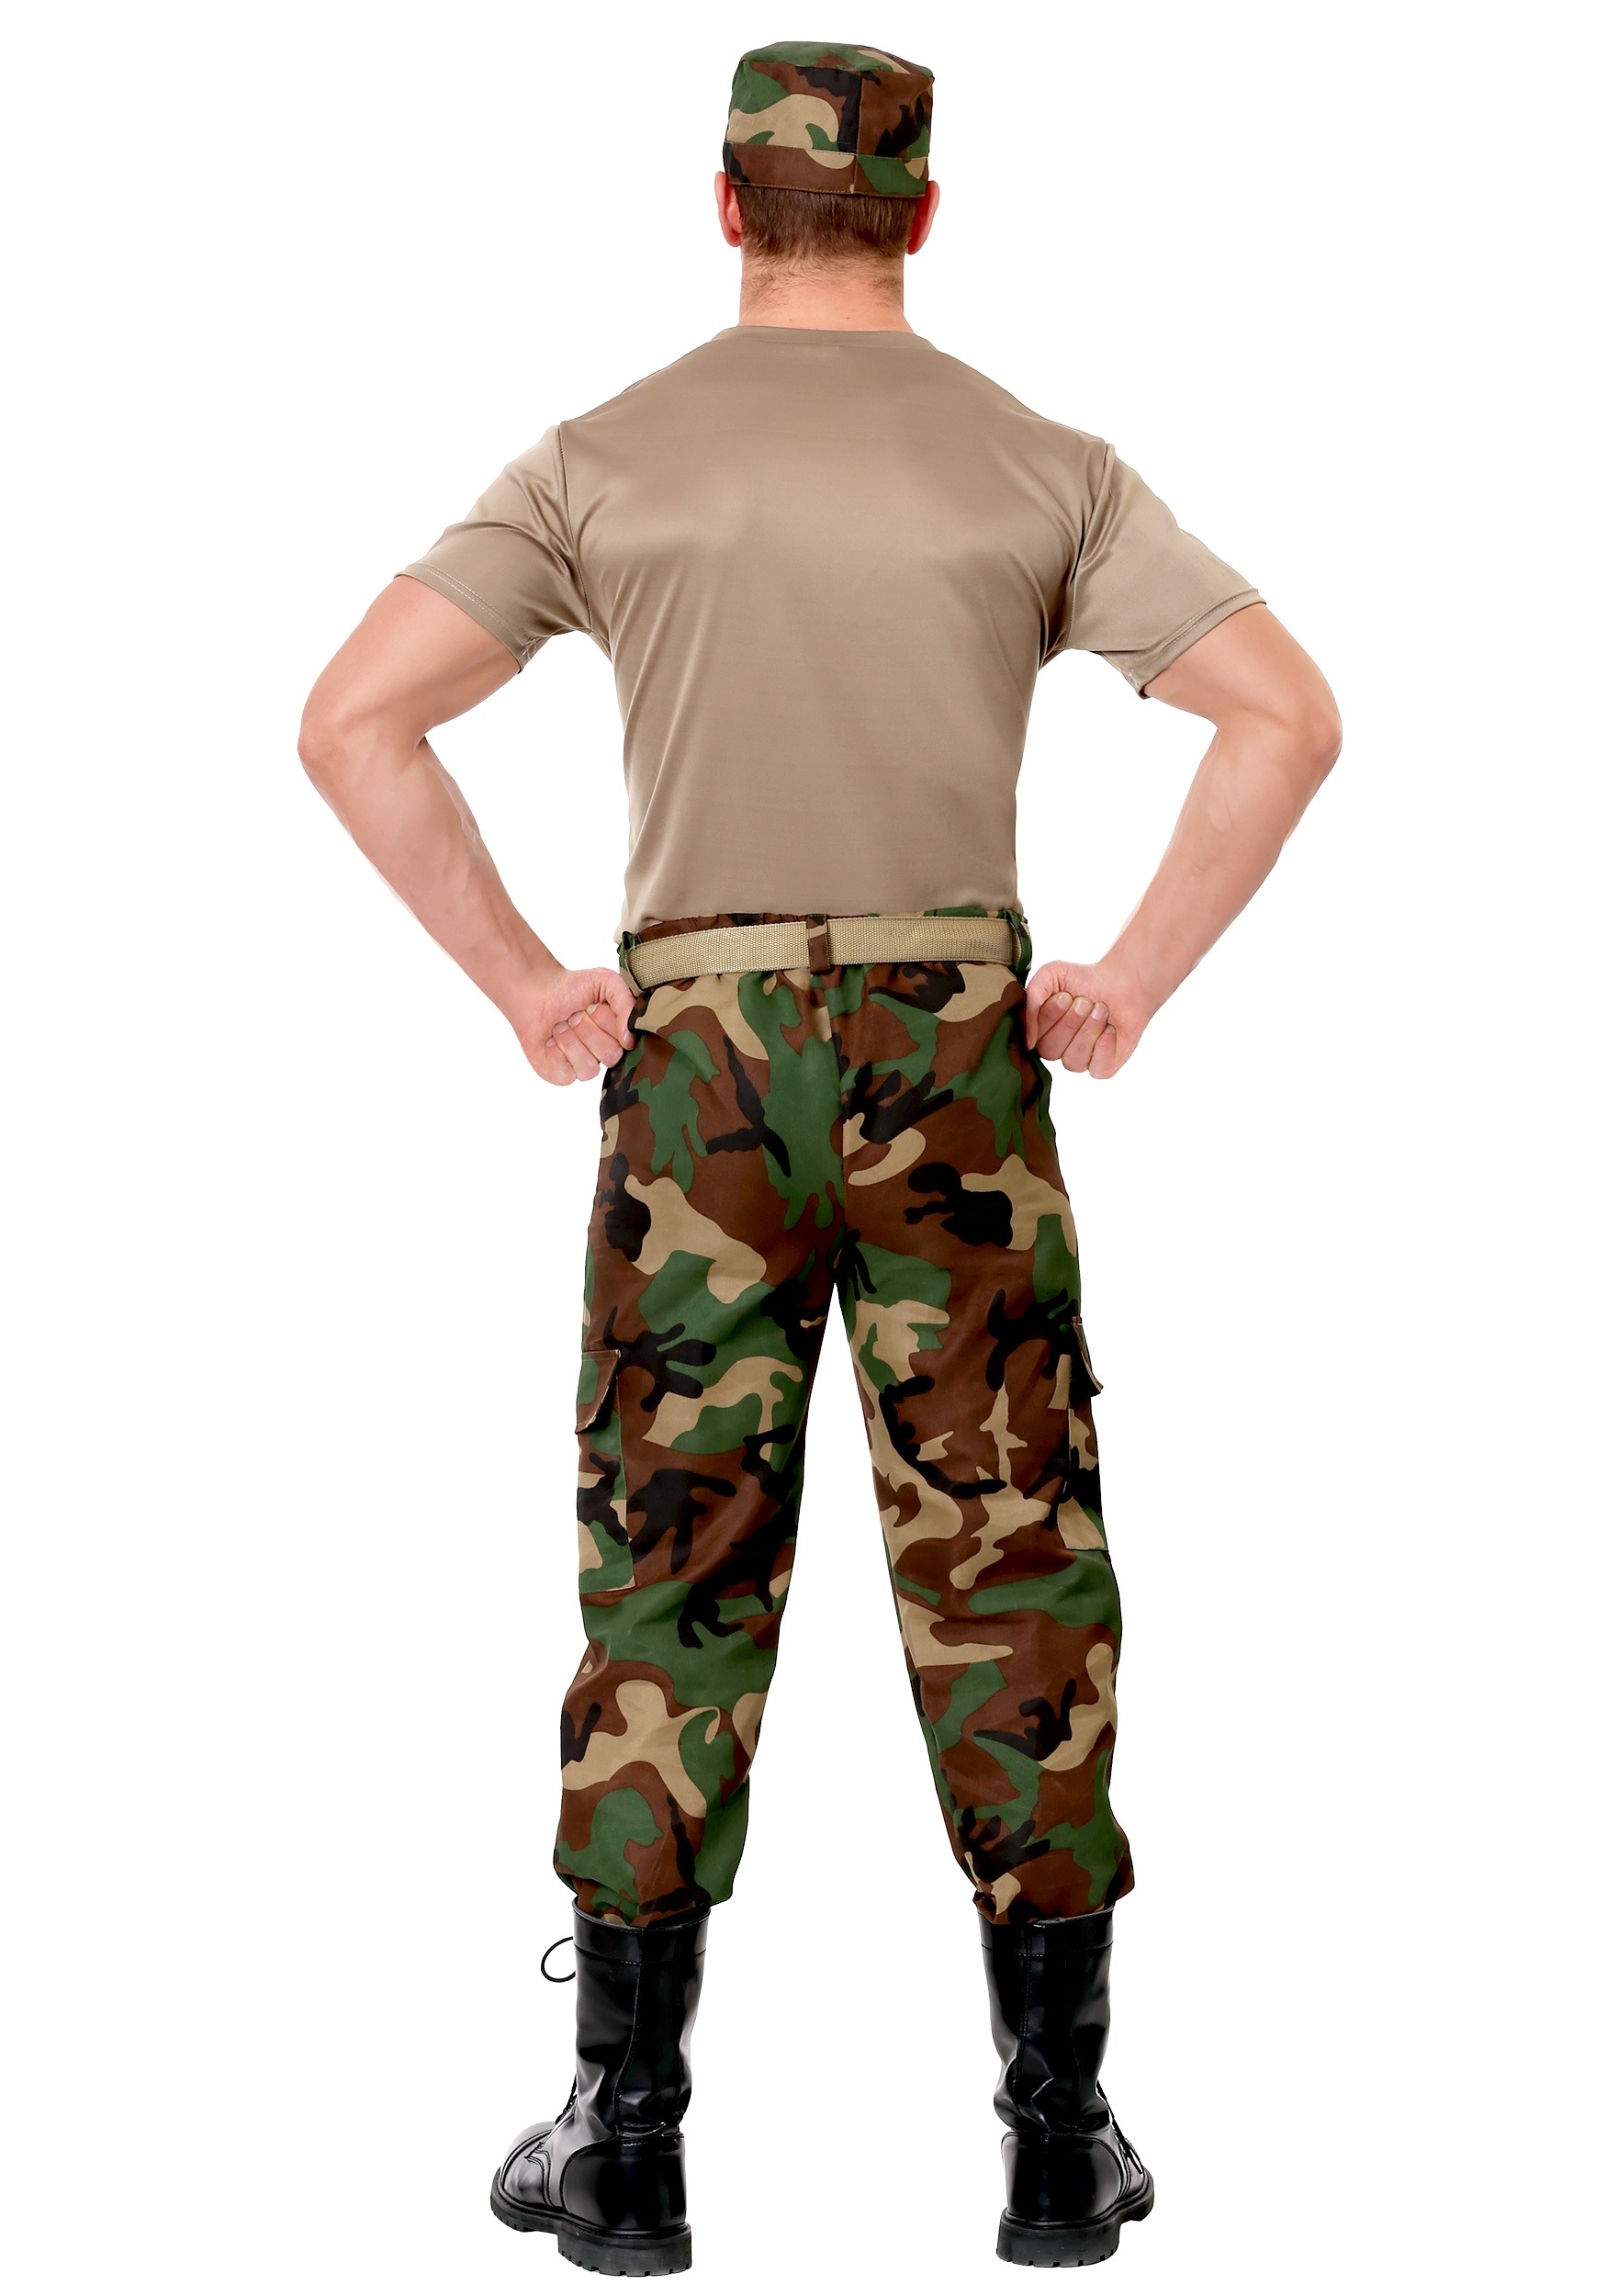 Men's Camo Soldier Fancy Dress Costume